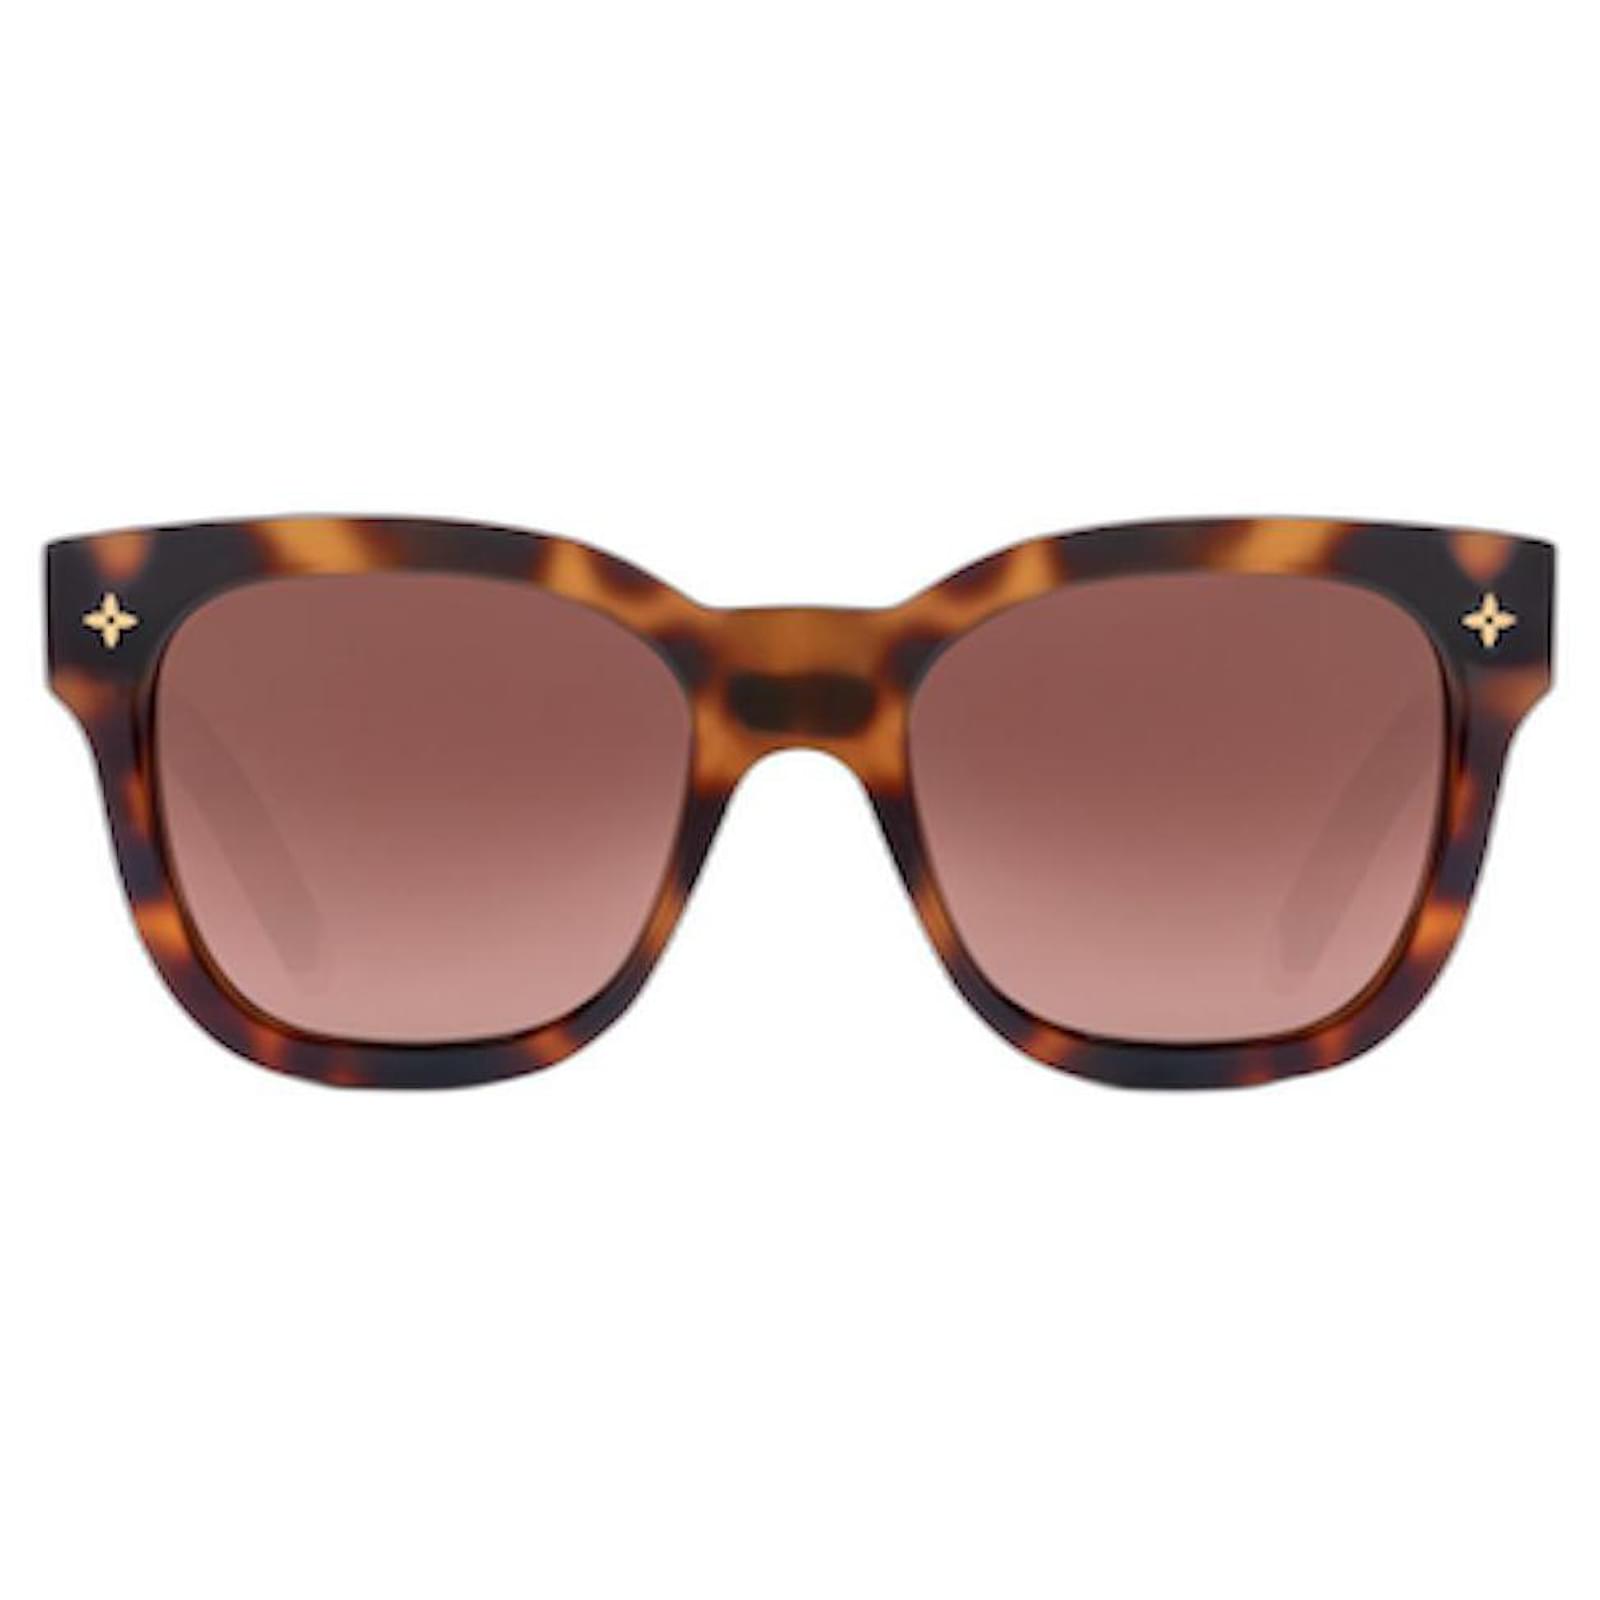 lv sunglasses price